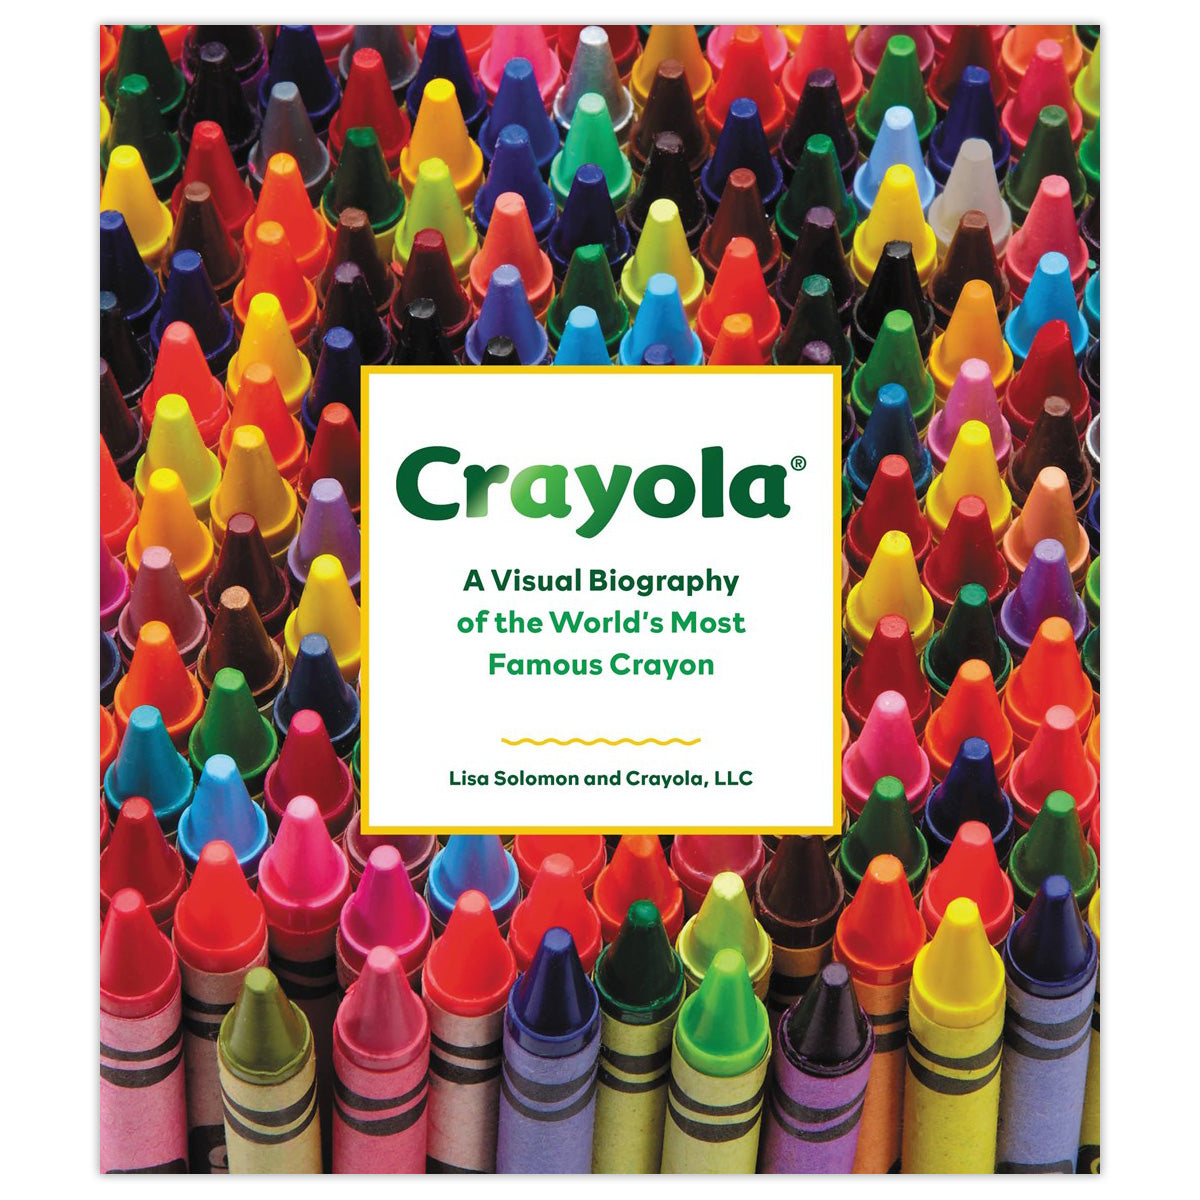 Crayola: A Visual Biography